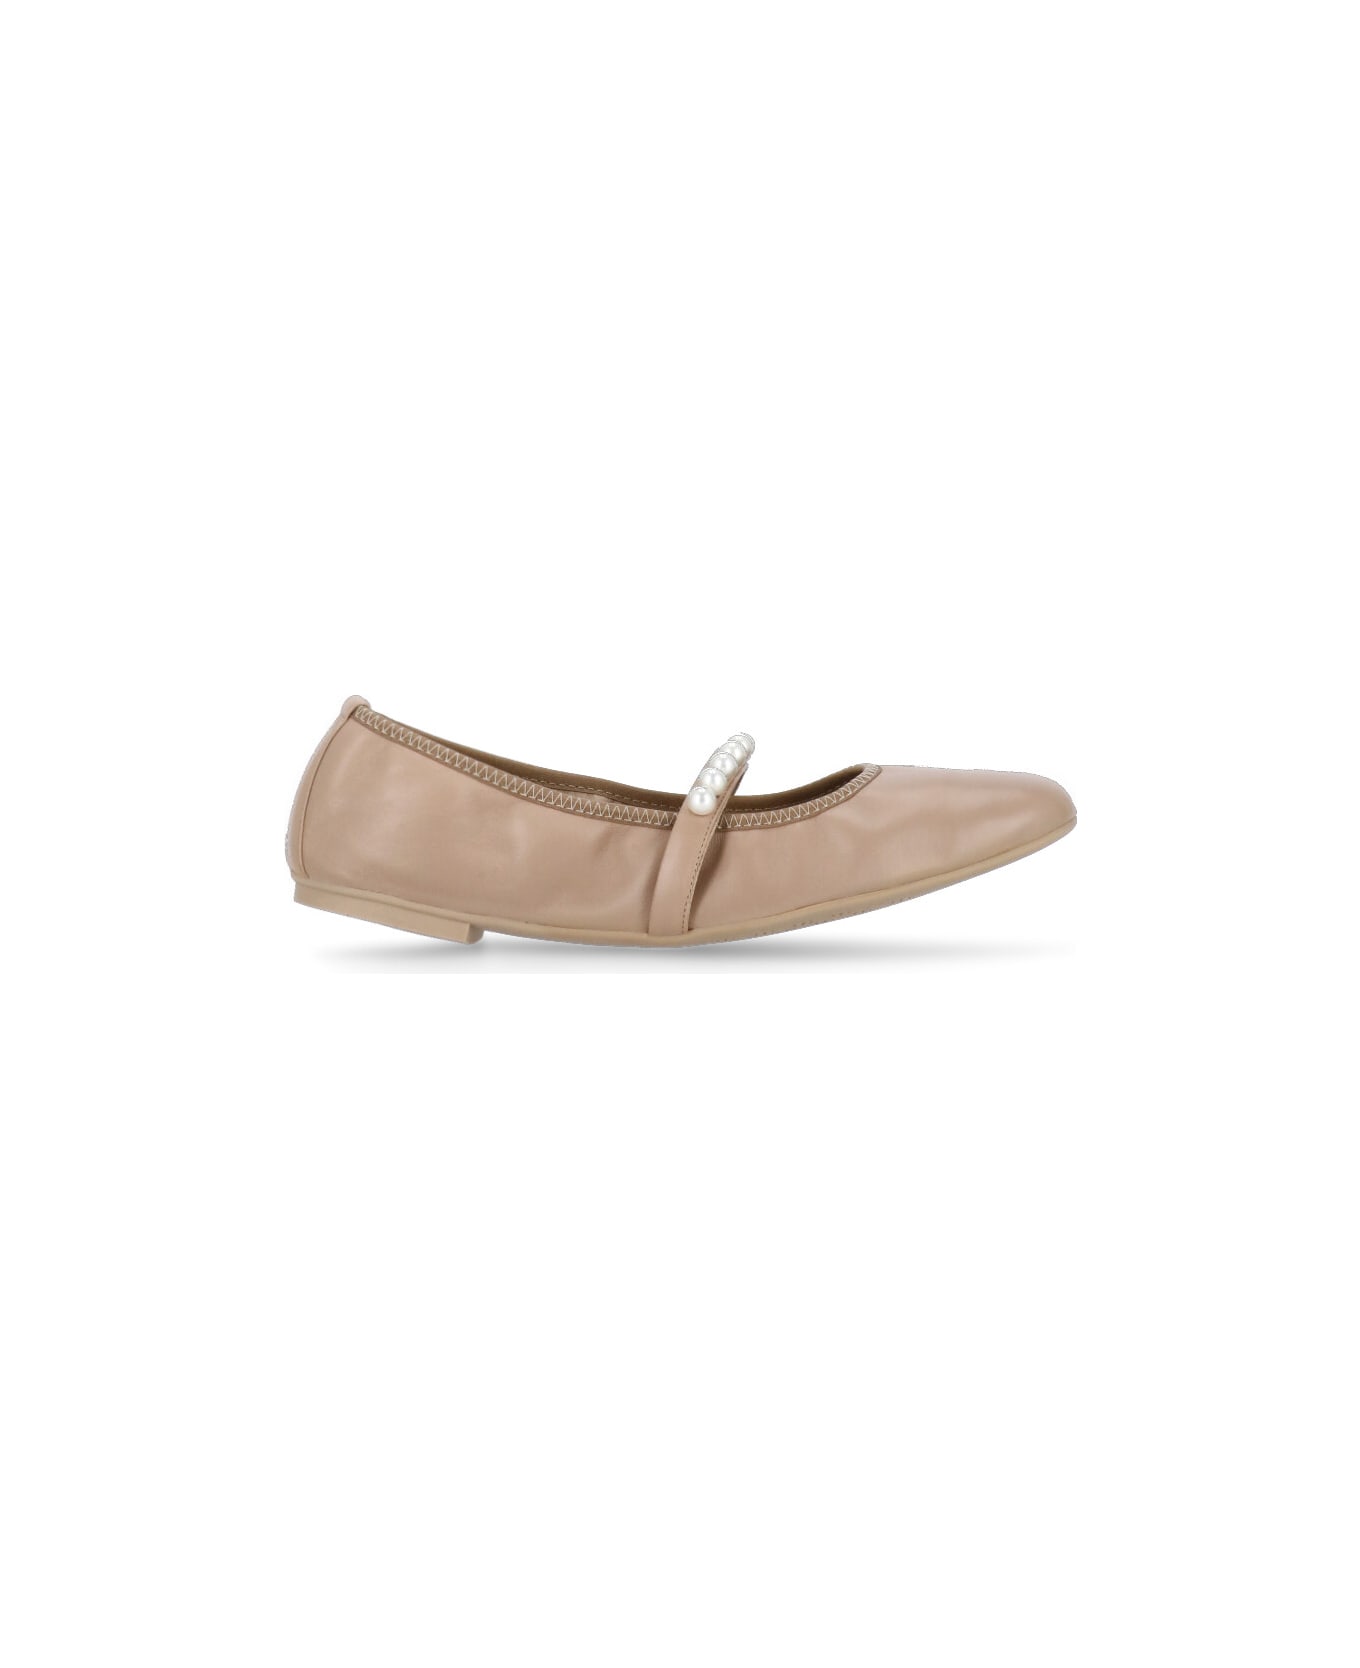 Stuart Weitzman Goldie Ballet Shoes - Pink フラットシューズ